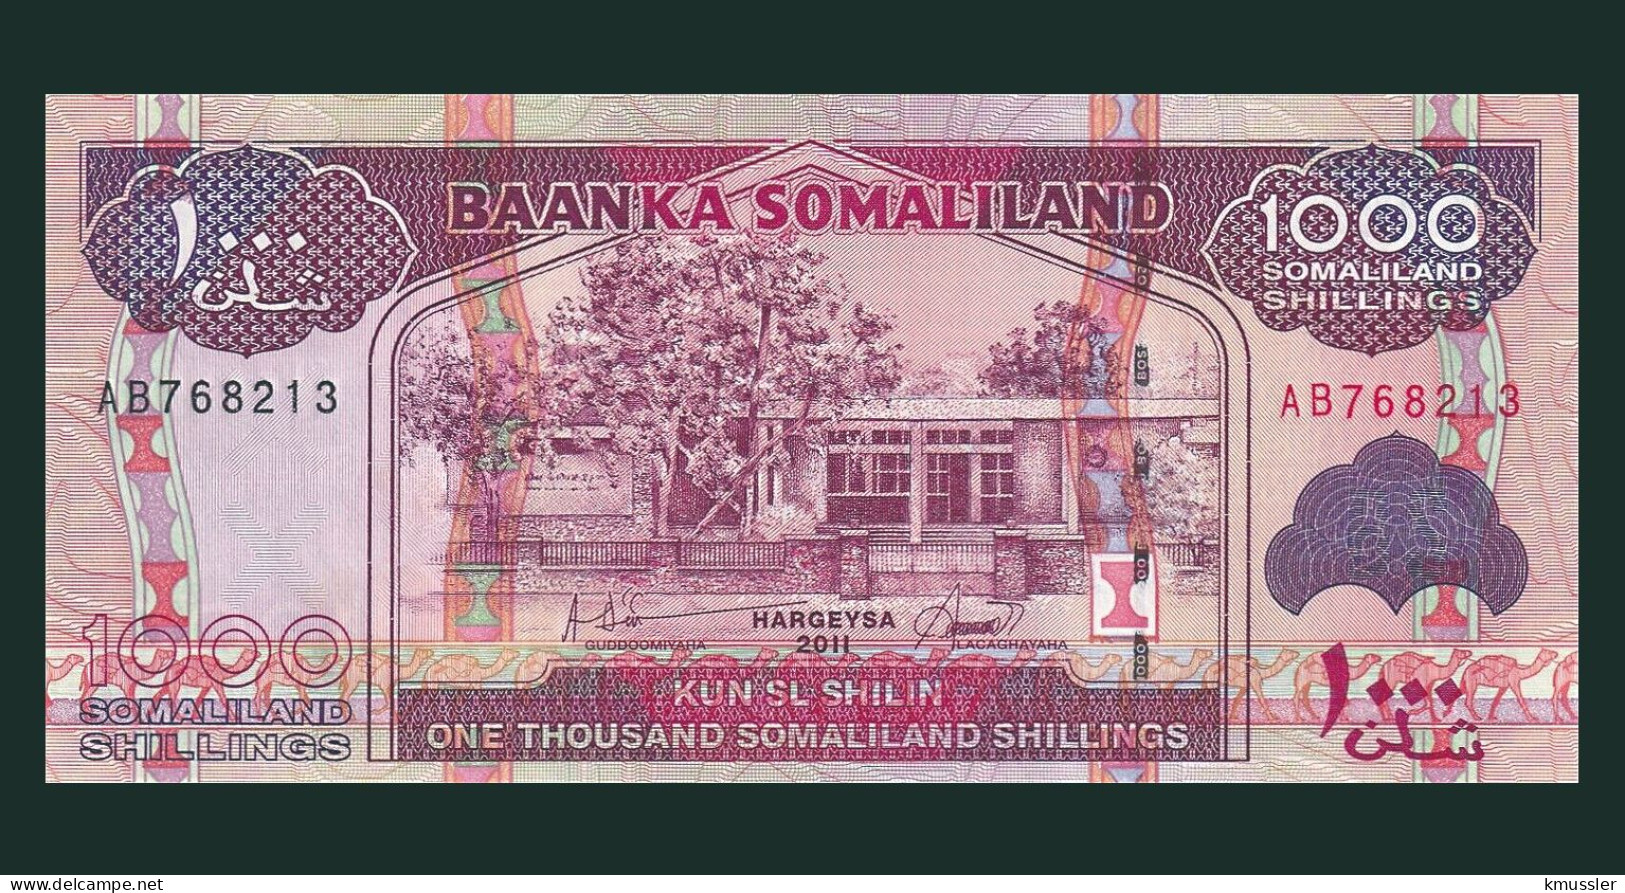 # # # Banknote Aus Somaliland 1.000 Shillings 2011 (P-20) UNC # # # - Somalia